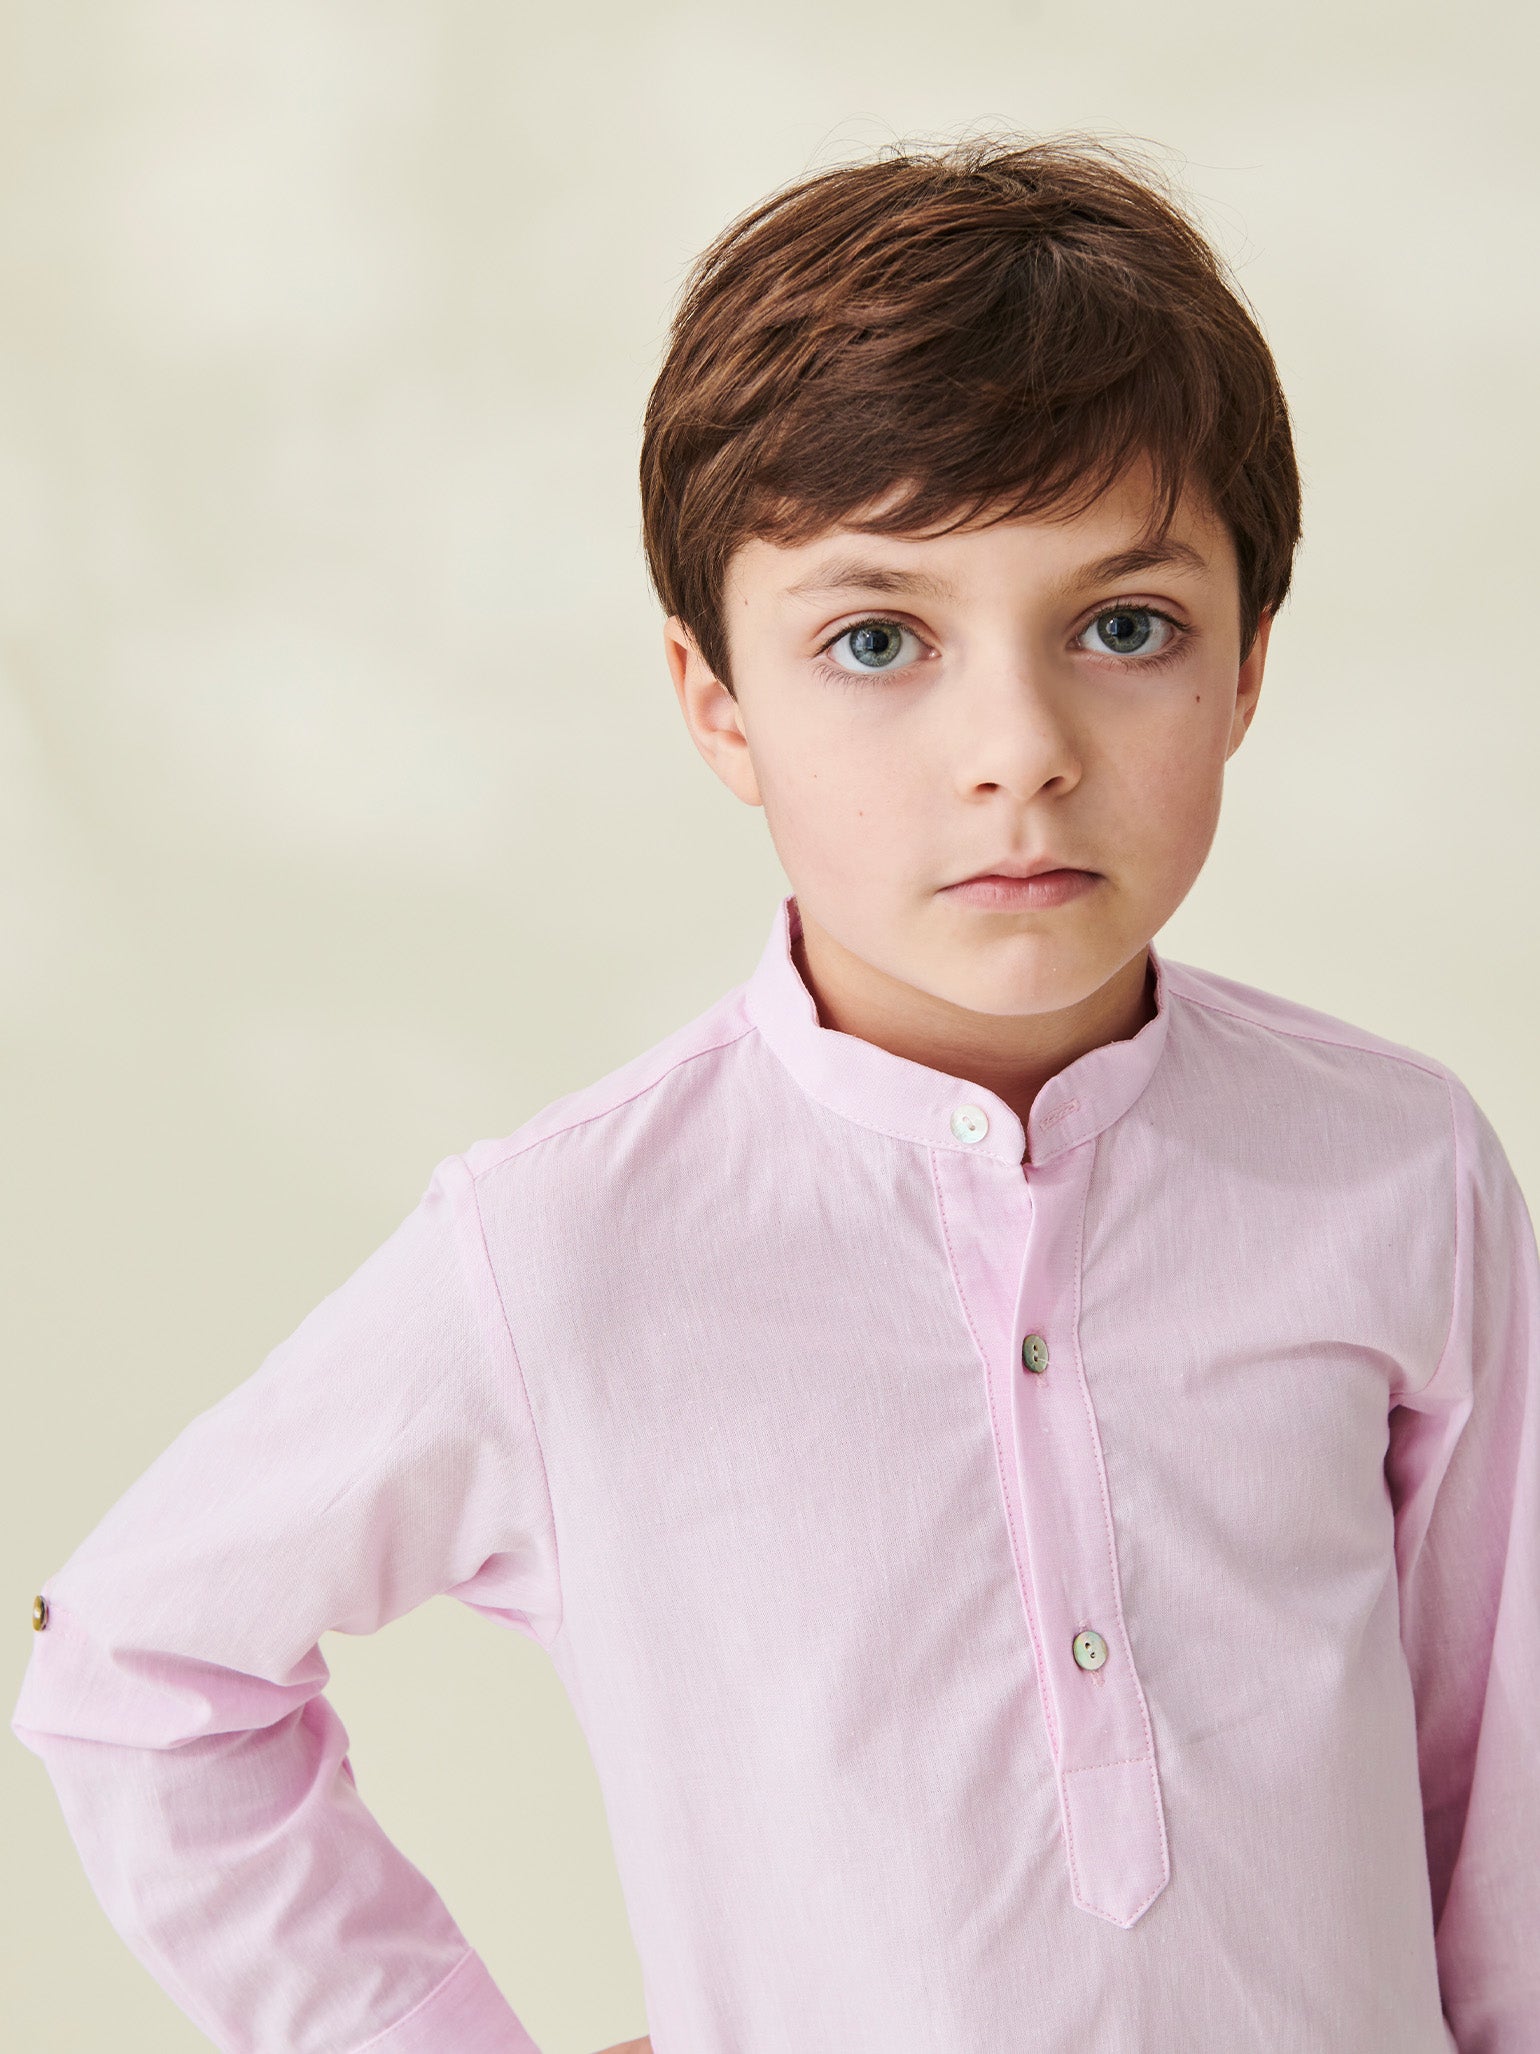 Boys Night Dress - Night Suits [Night Wear] for Kids Boy Online | One  Friday World